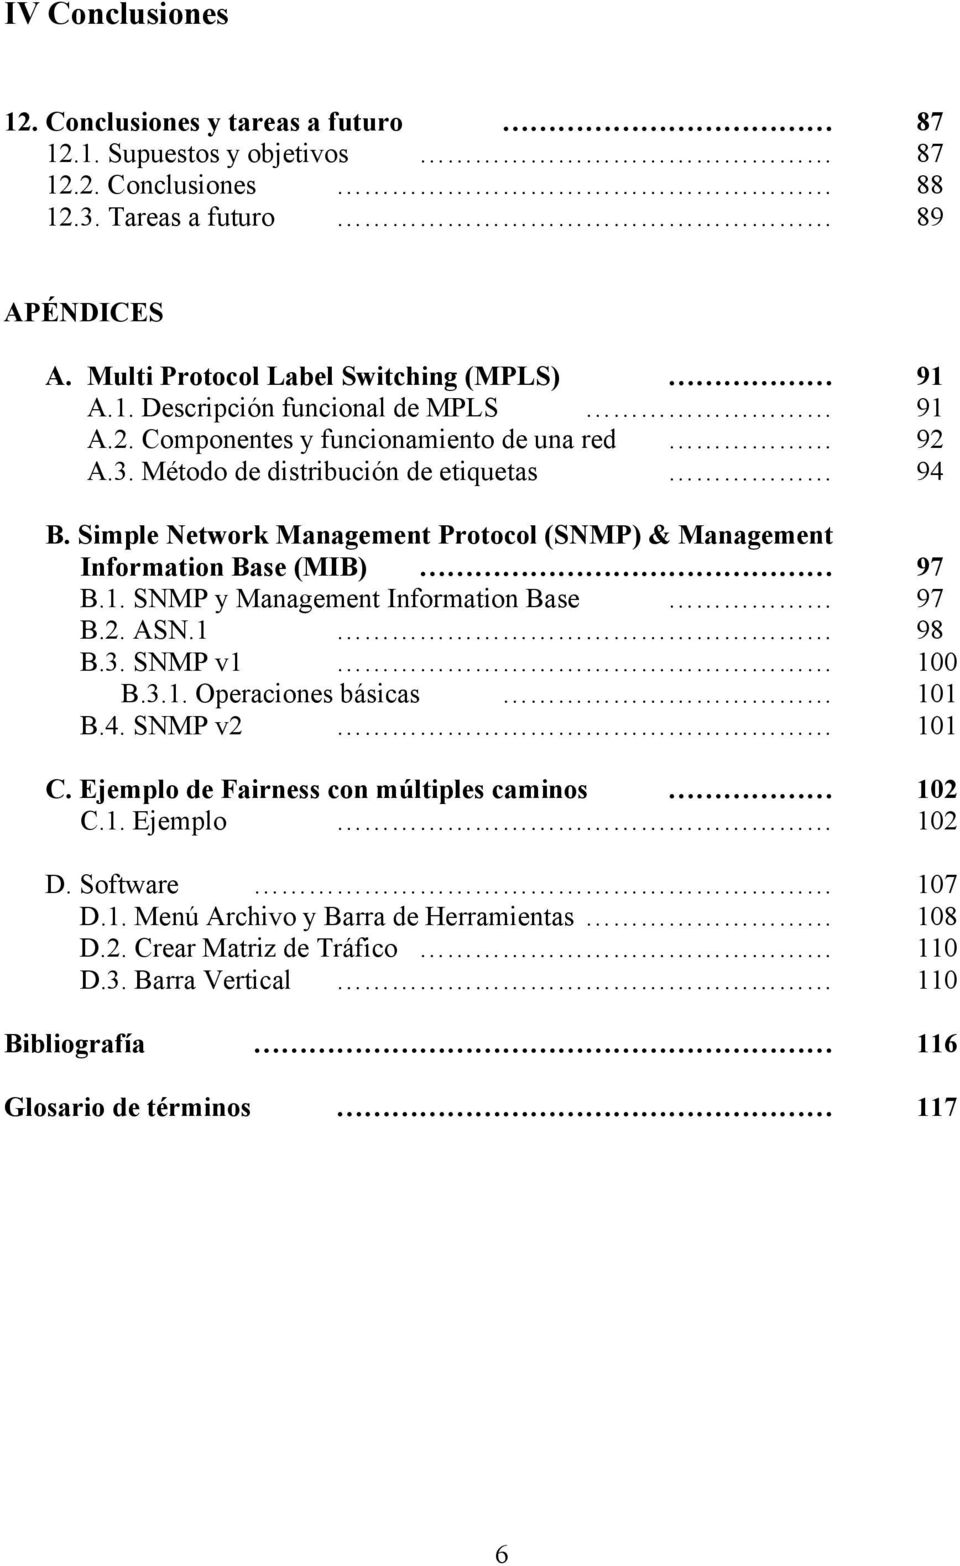 Simple Network Management Protocol (SNMP) & Management Information Base (MIB) 97 B.1. SNMP y Management Information Base 97 B.2. ASN.1 98 B.3. SNMP v1 100 B.3.1. Operaciones básicas 101 B.